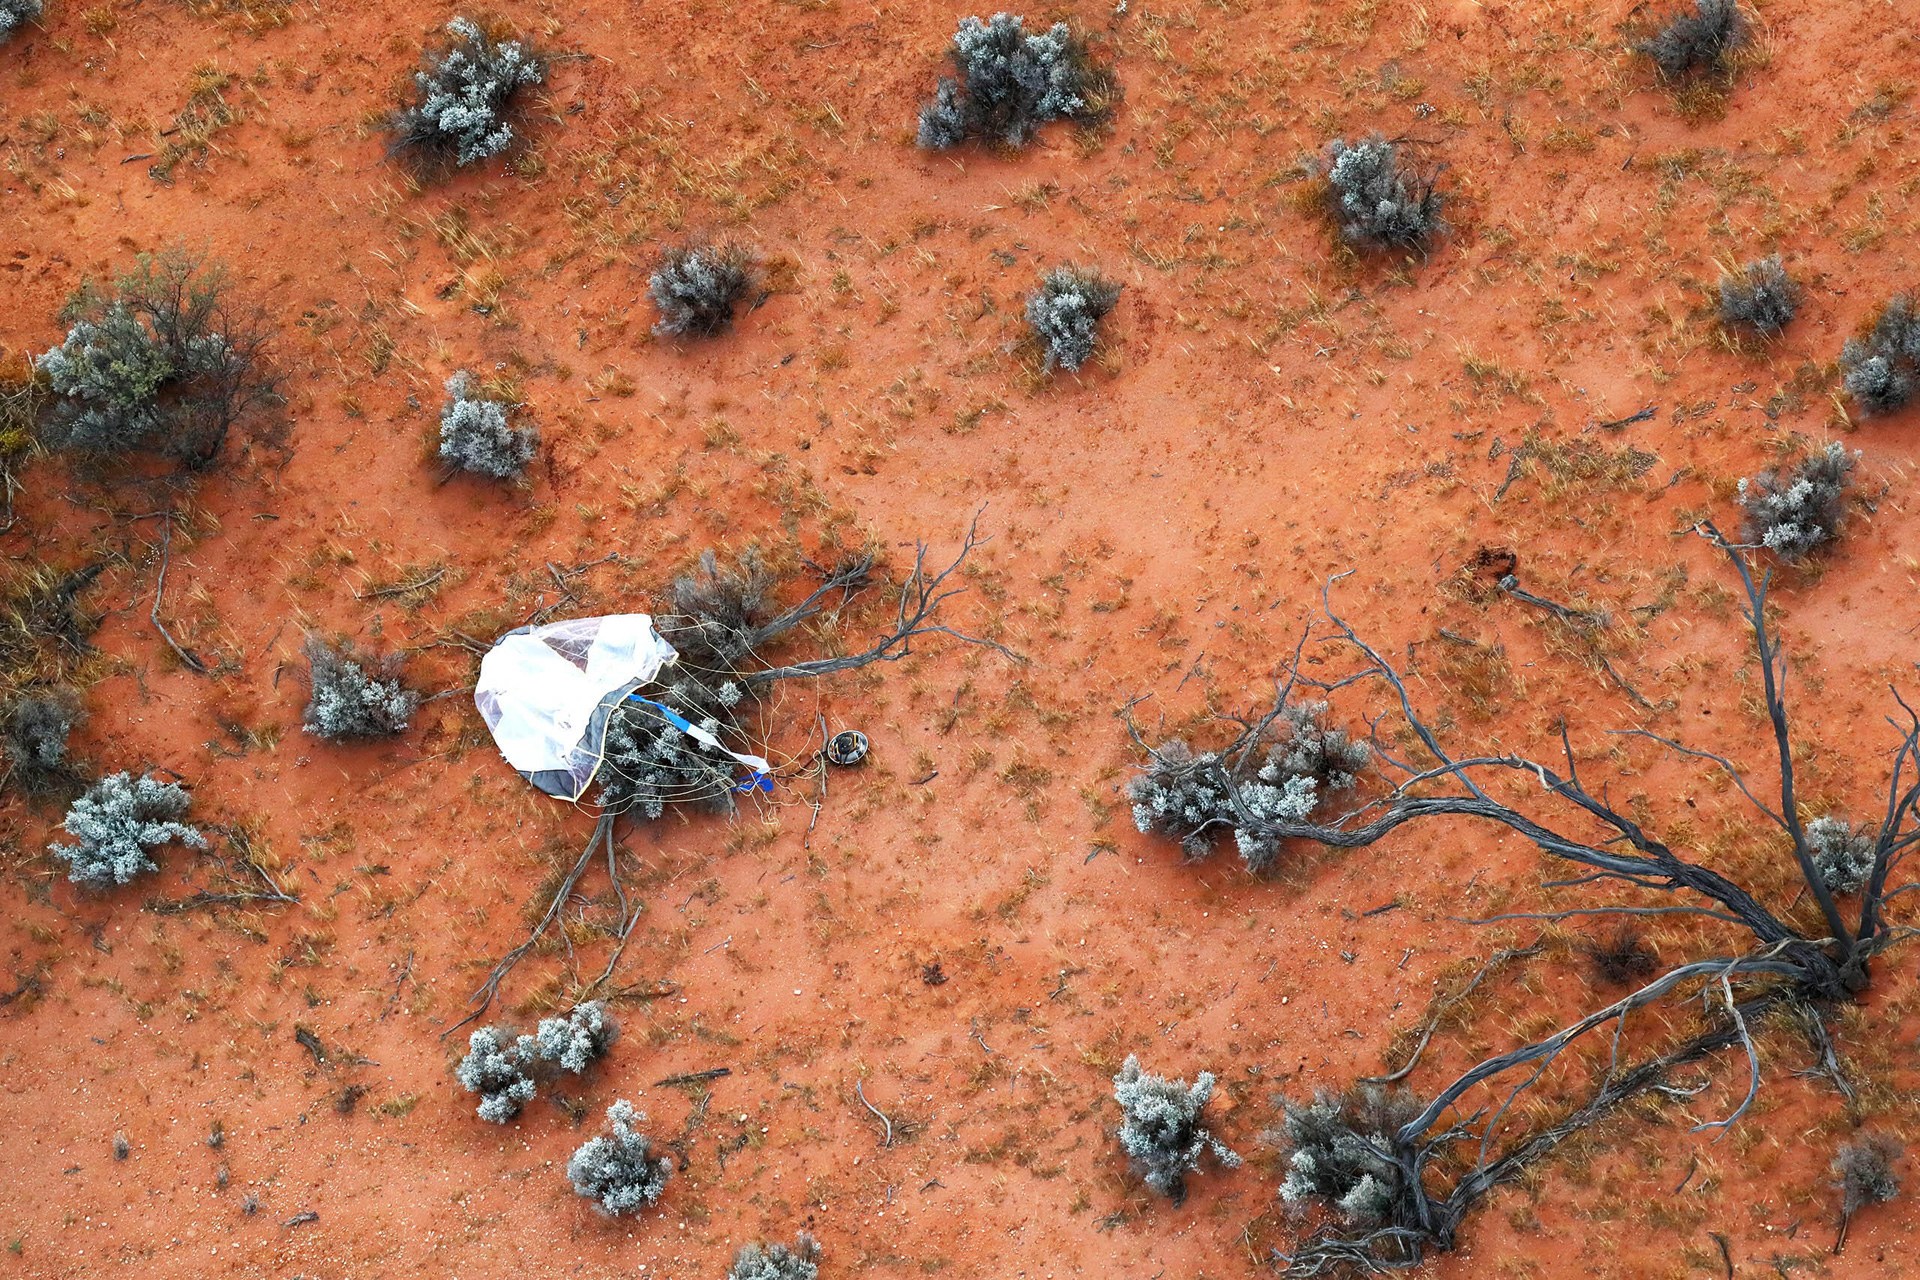 Hayabusa2 sample capsule after landing in Australia